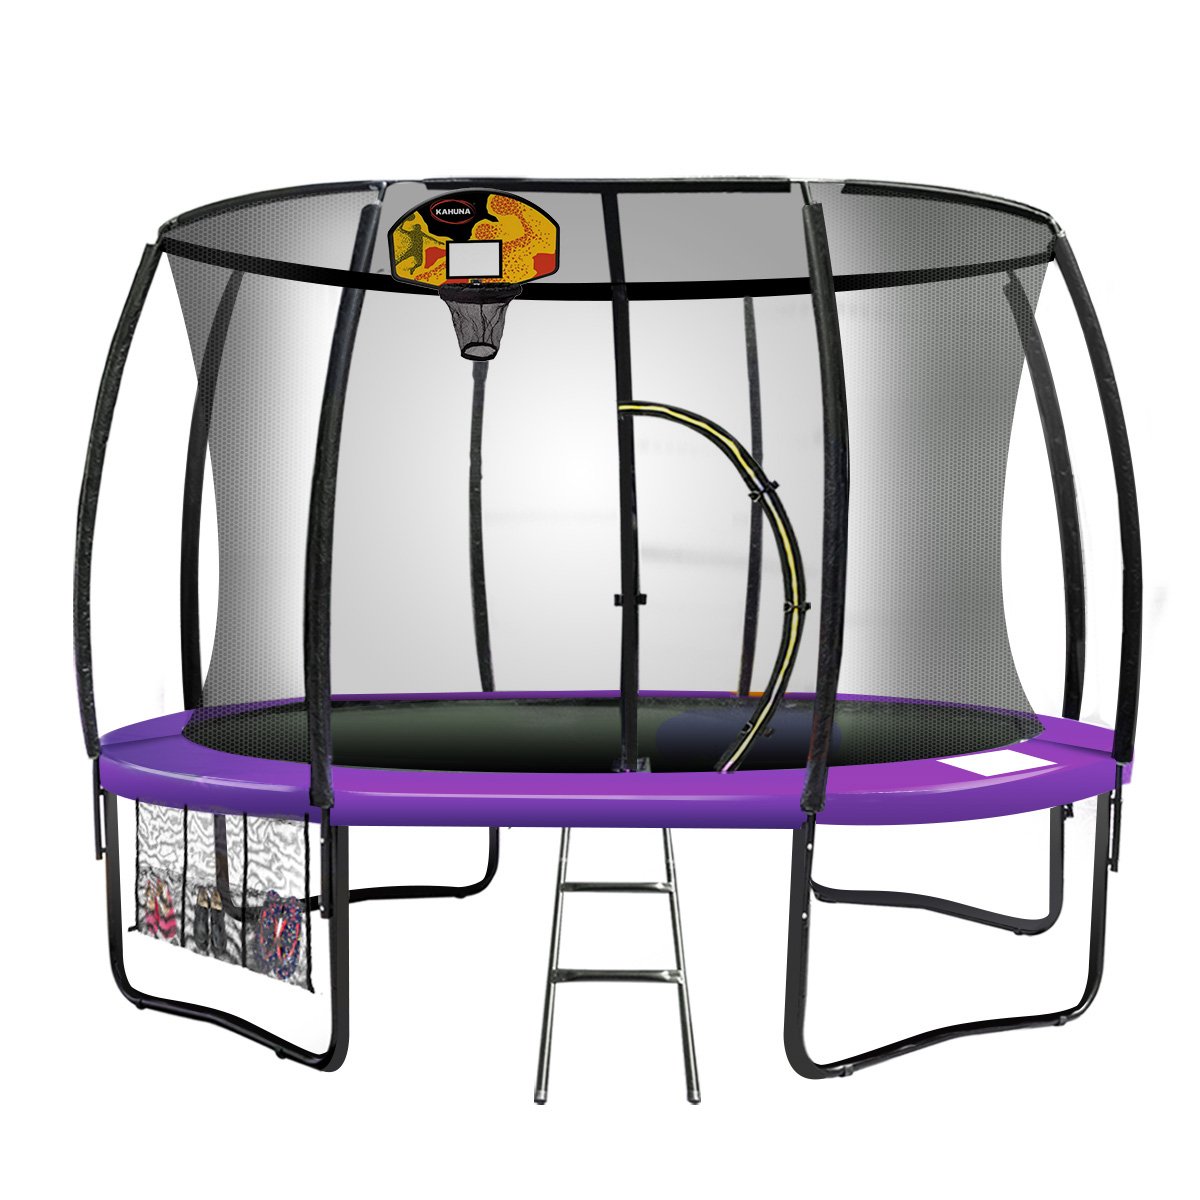 12ft Outdoor Trampoline Kids Children With Safety Enclosure Pad Mat Ladder Basketball Hoop Set - Purple